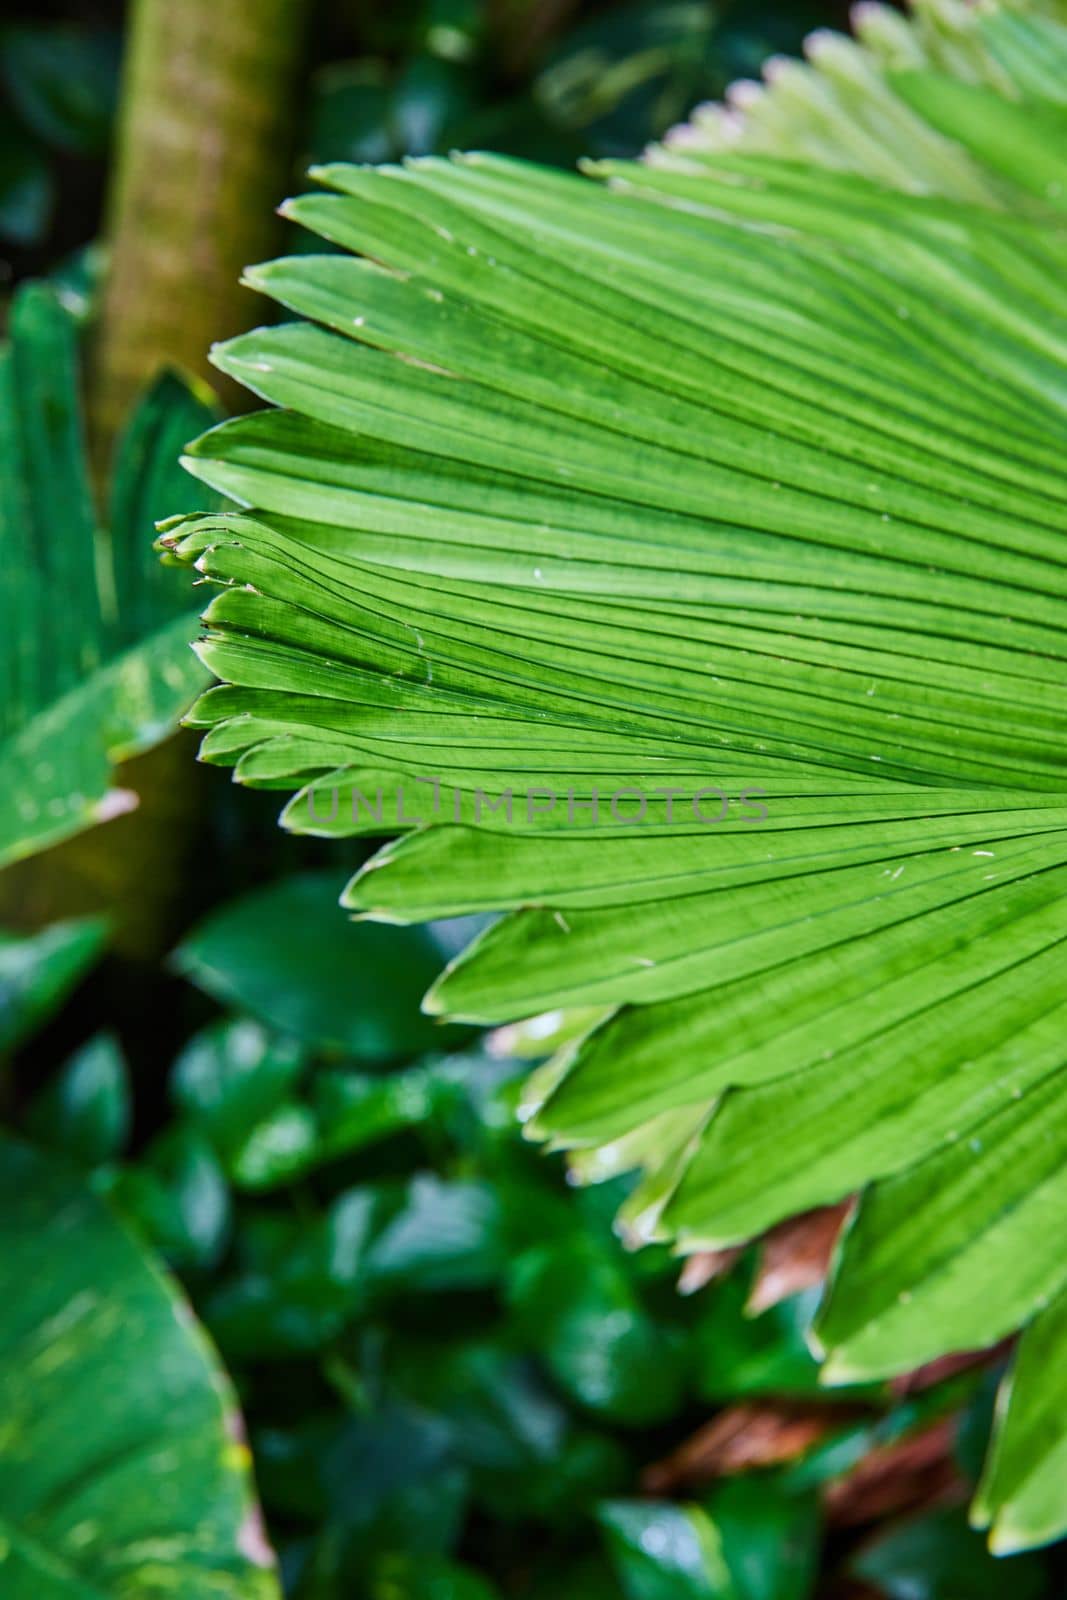 Image of Fan shape leaves on rainforest plant in detail